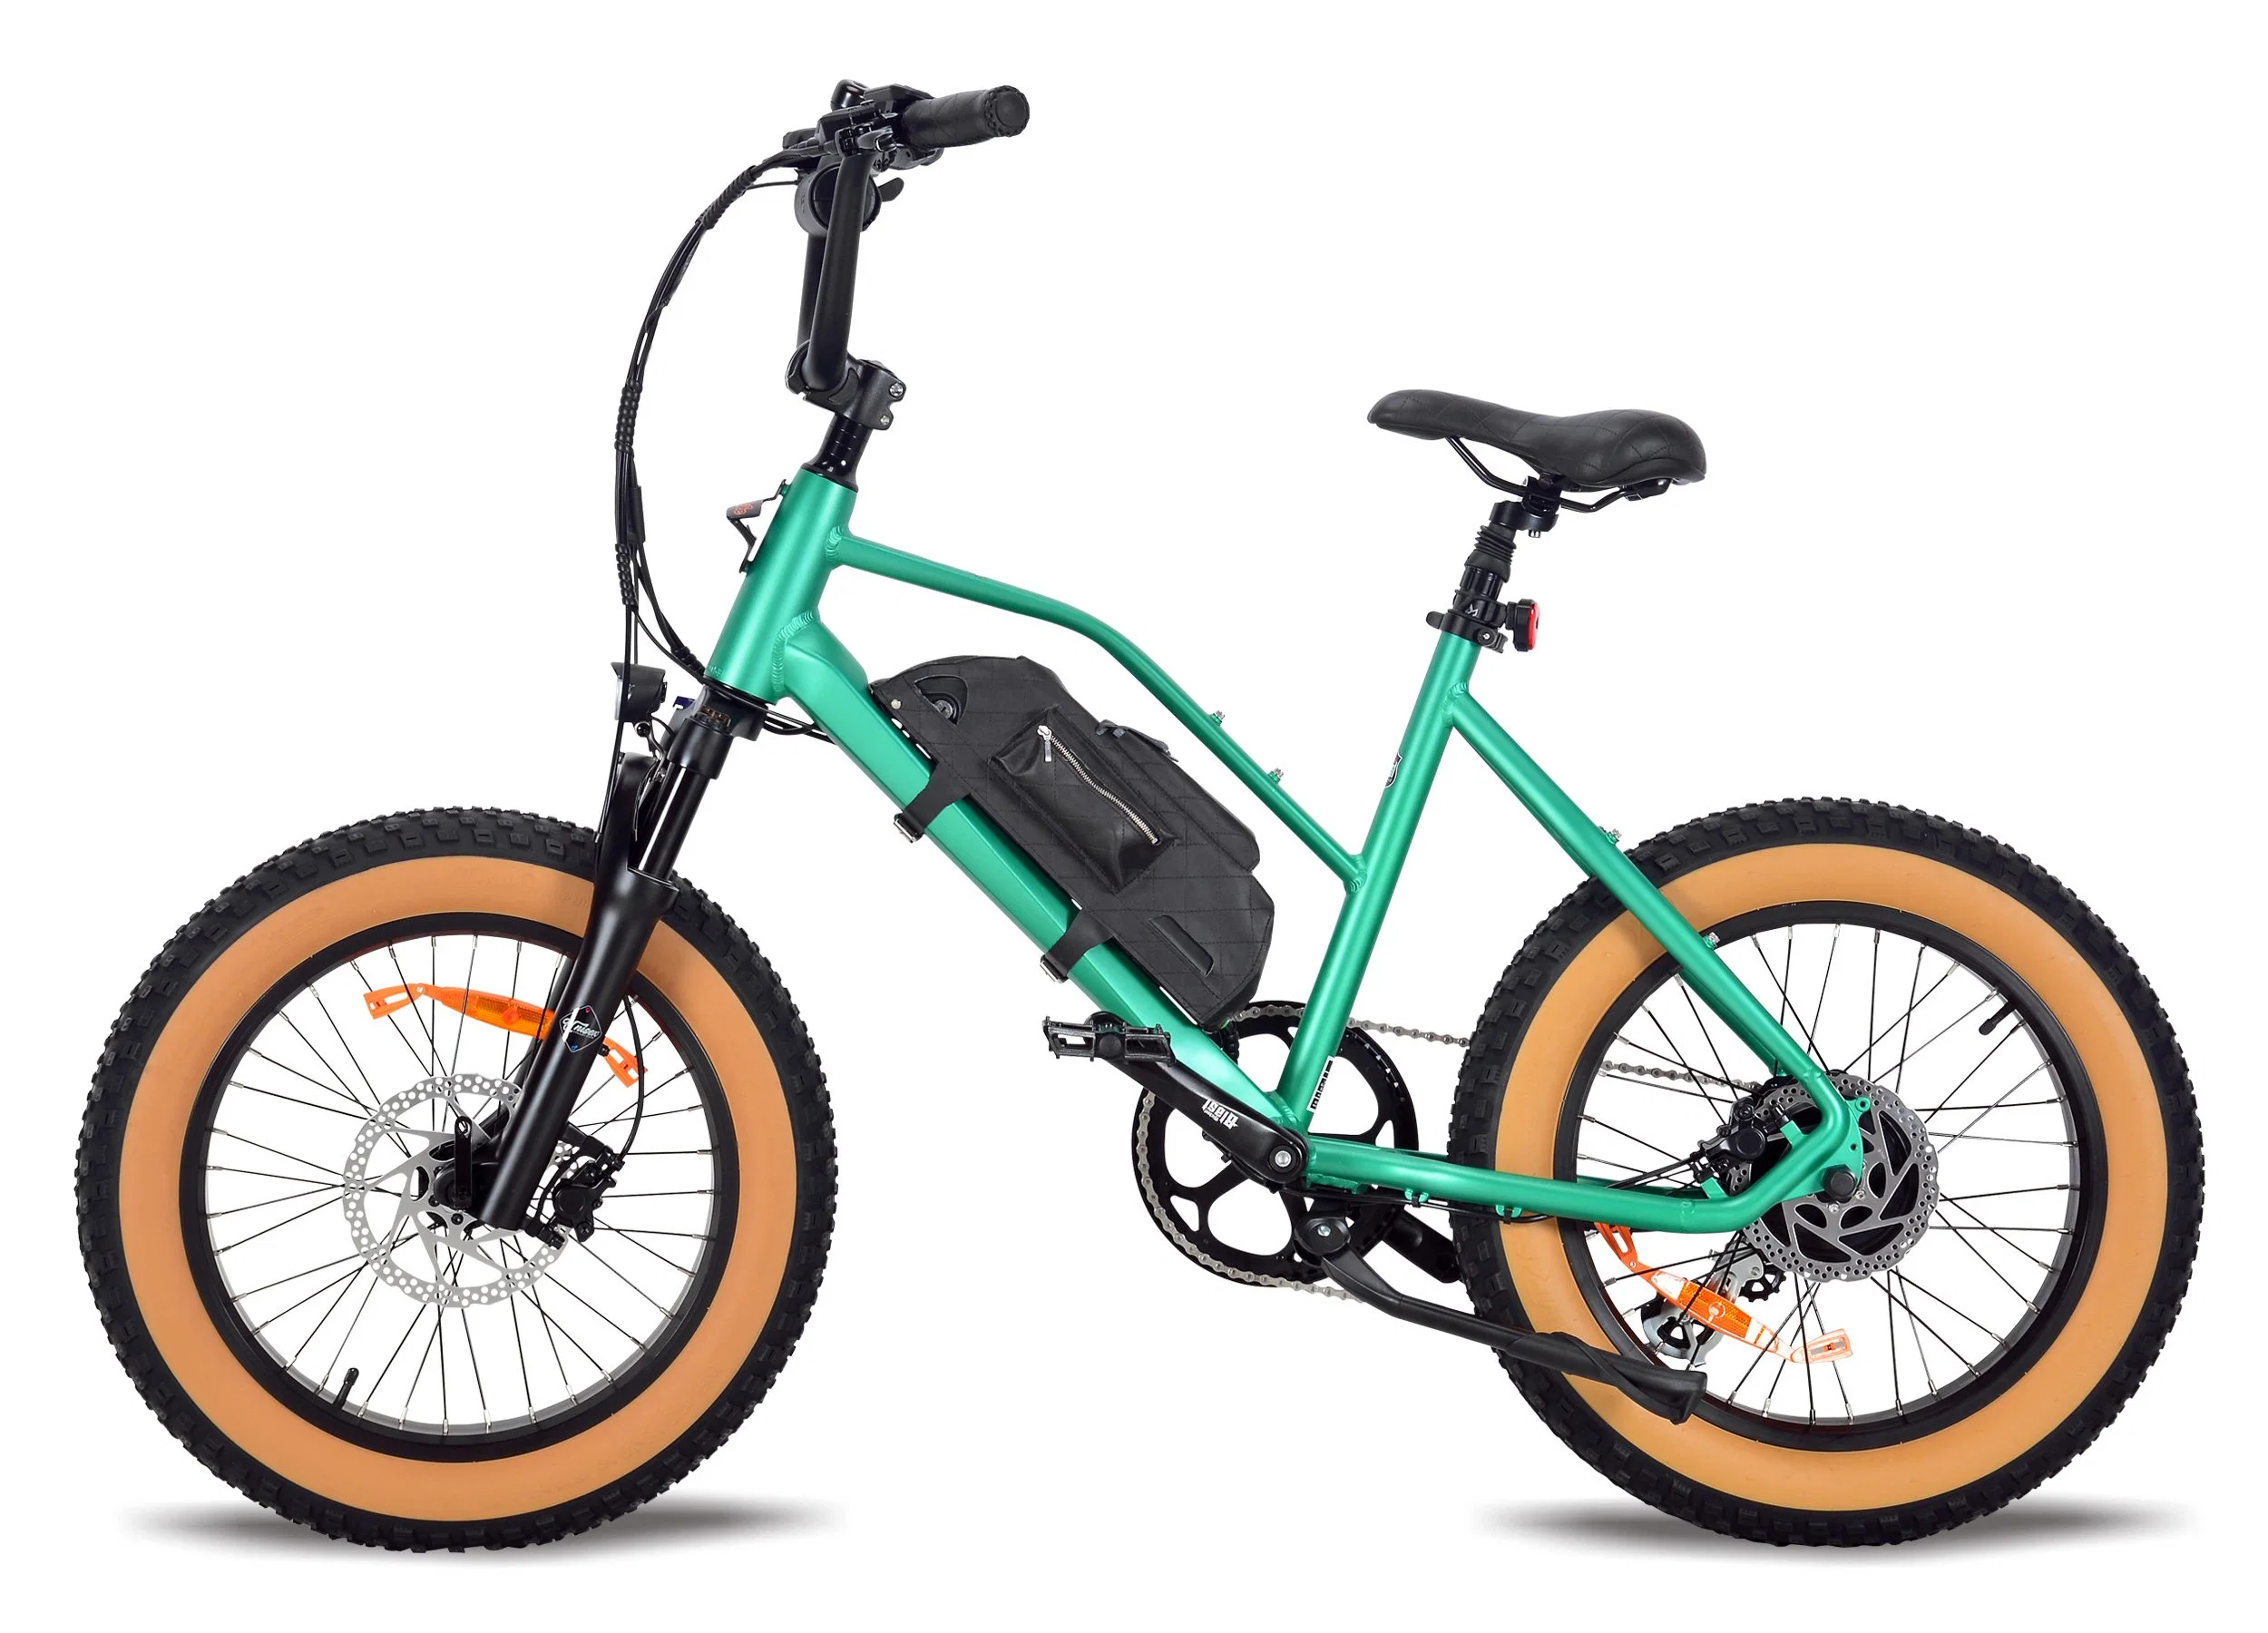 New Soda Ebike for Cyclelove UnionSize Dirar دمج الوظيفة وأزياء العصر الحديث